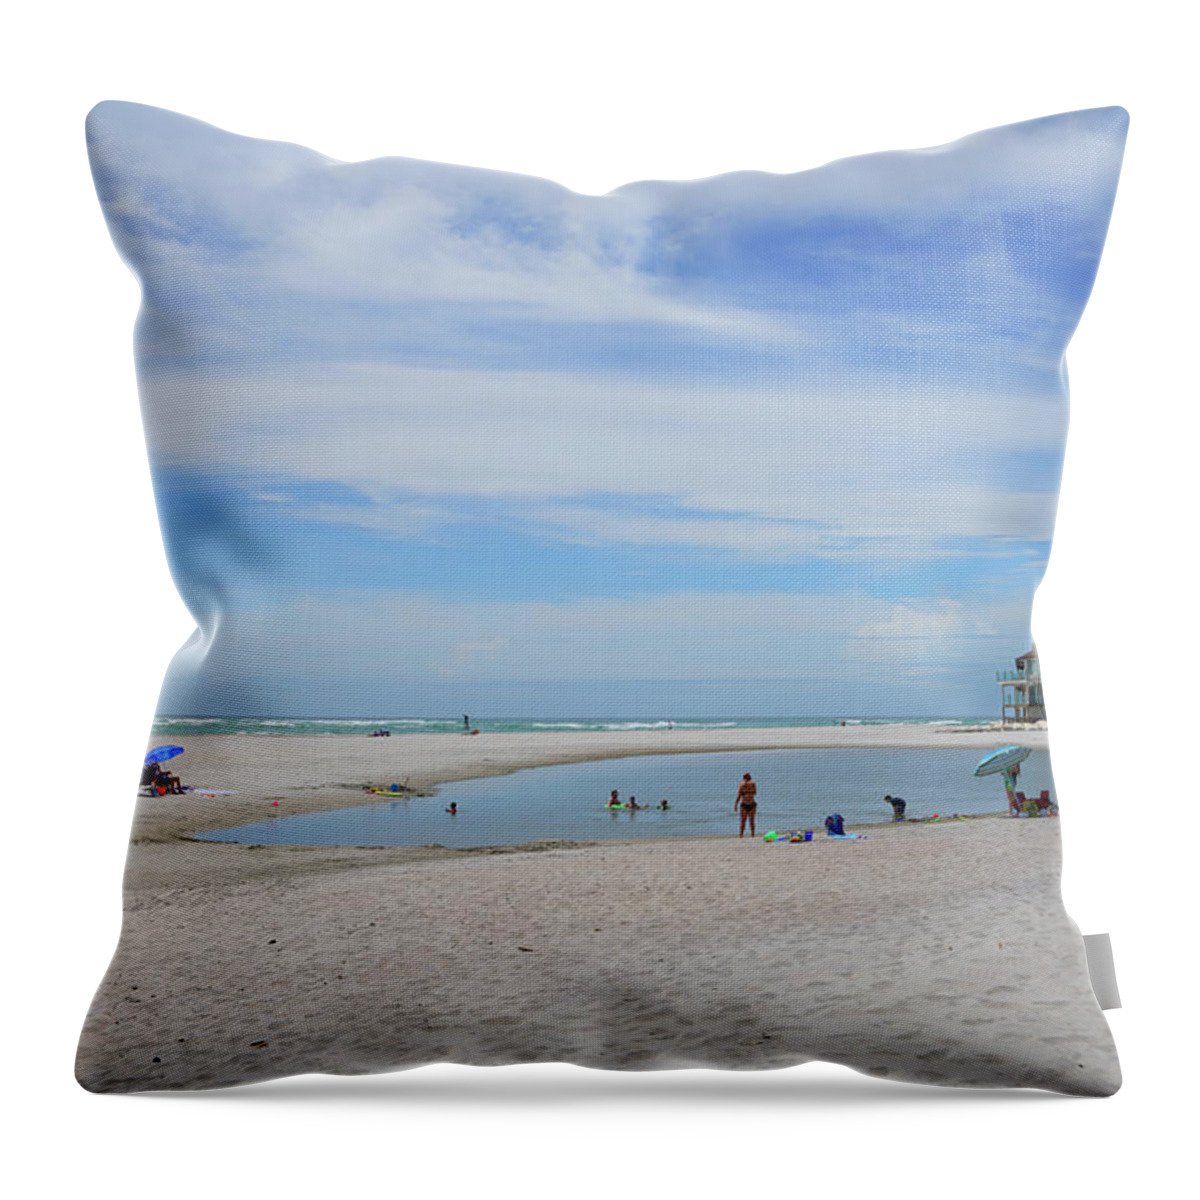 Beach Scene Throw Pillow featuring the photograph North Topsail Island Beach by Mike McGlothlen